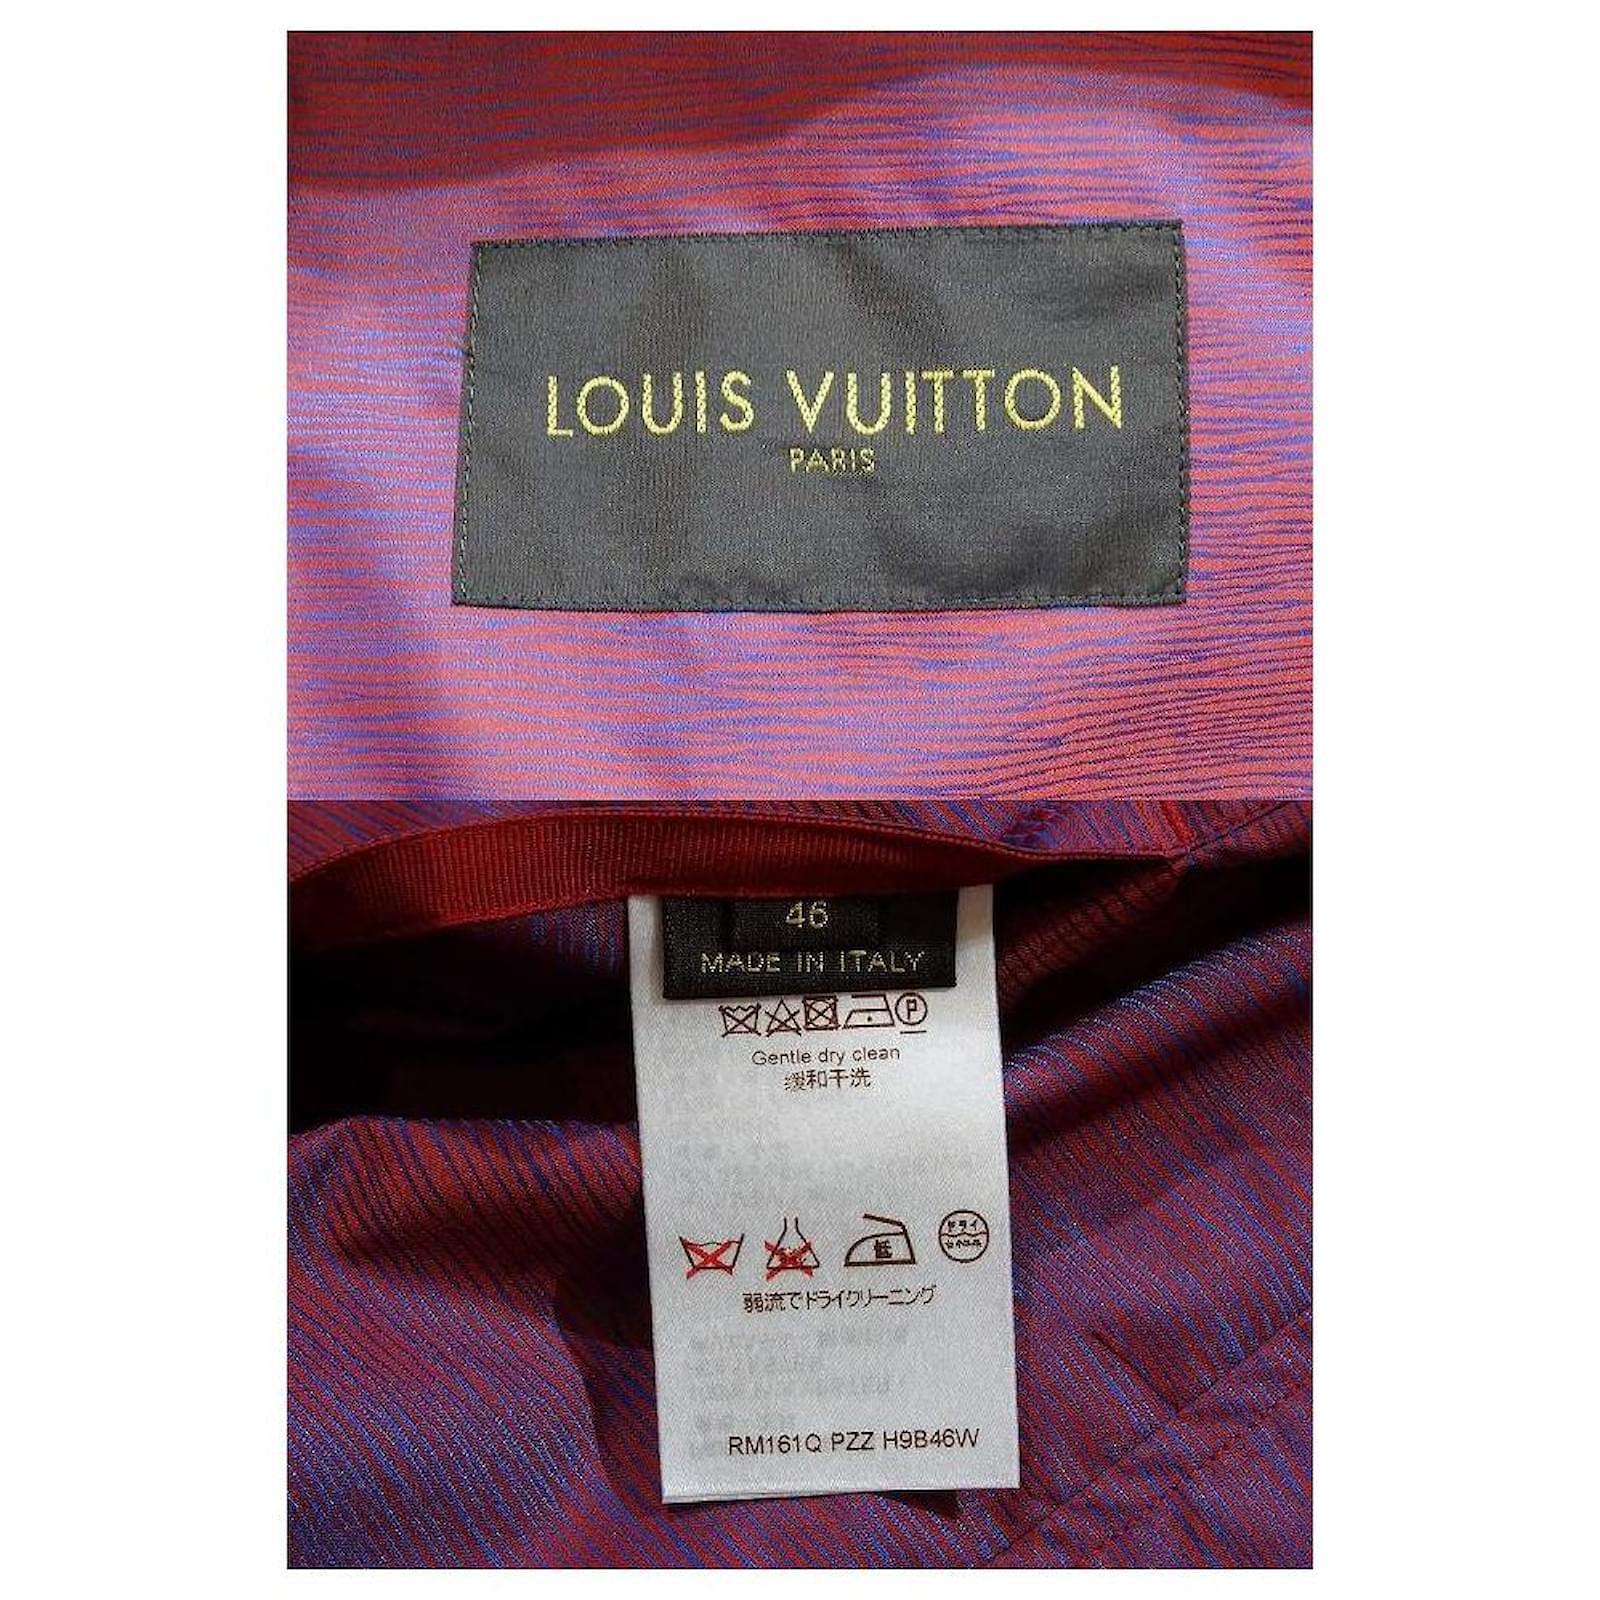 Used] LOUIS VUITTON Epi Windbreaker Louis Vuitton Jacket Dark red